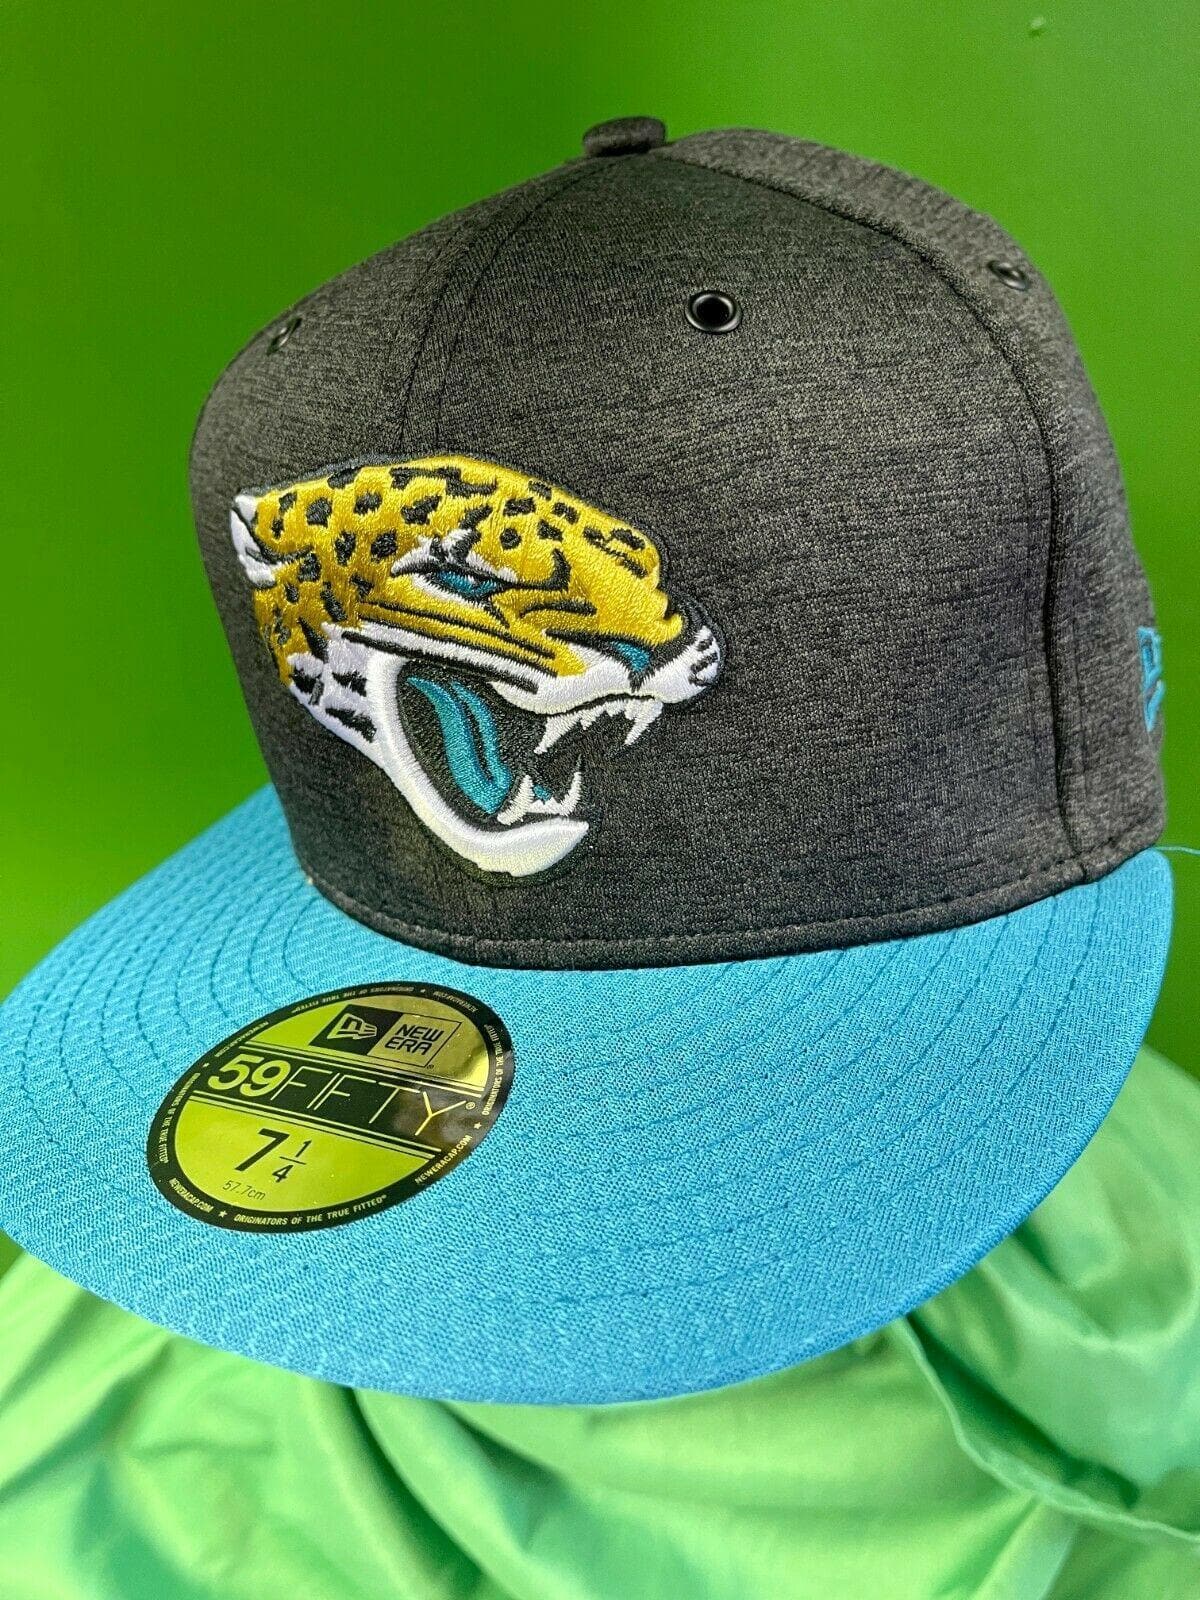 NFL Jacksonville Jaguars Sideline New Era 59FIFTY Hat/Cap Size 7-1/4 NWT